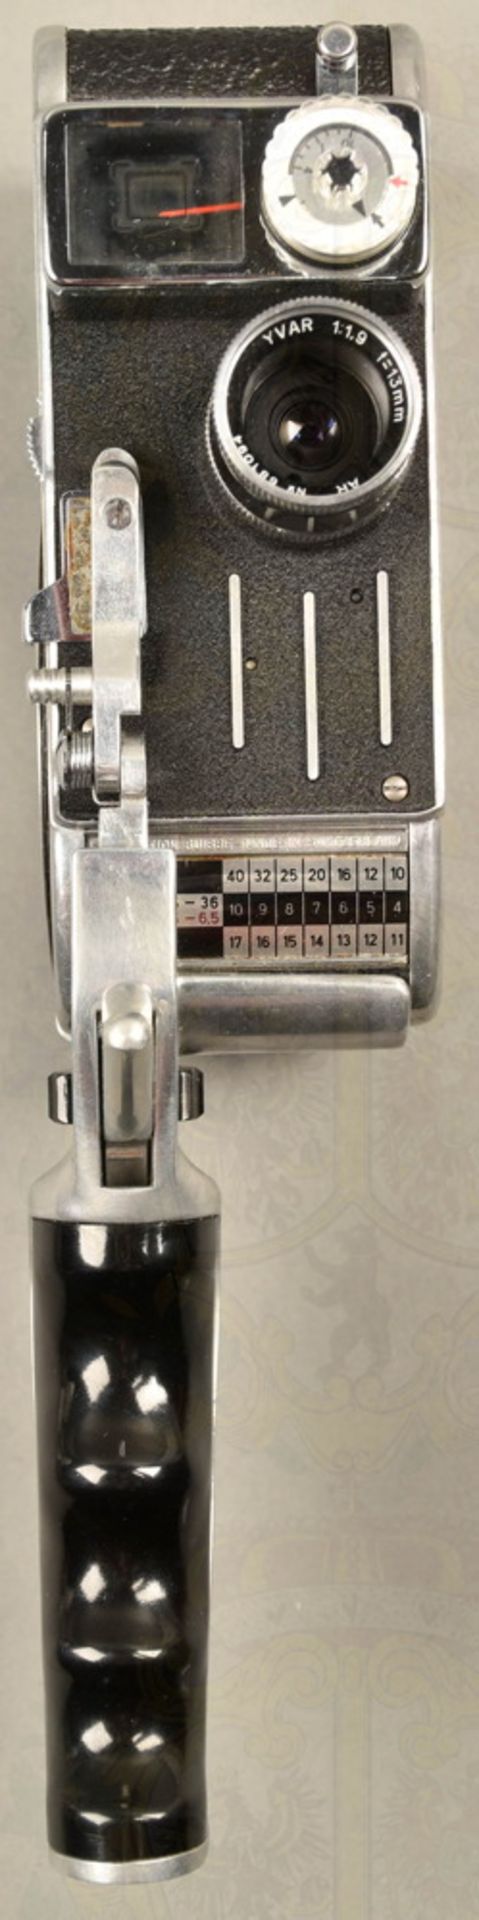 Handkamera Paillard Bolex 1959 - Image 2 of 3